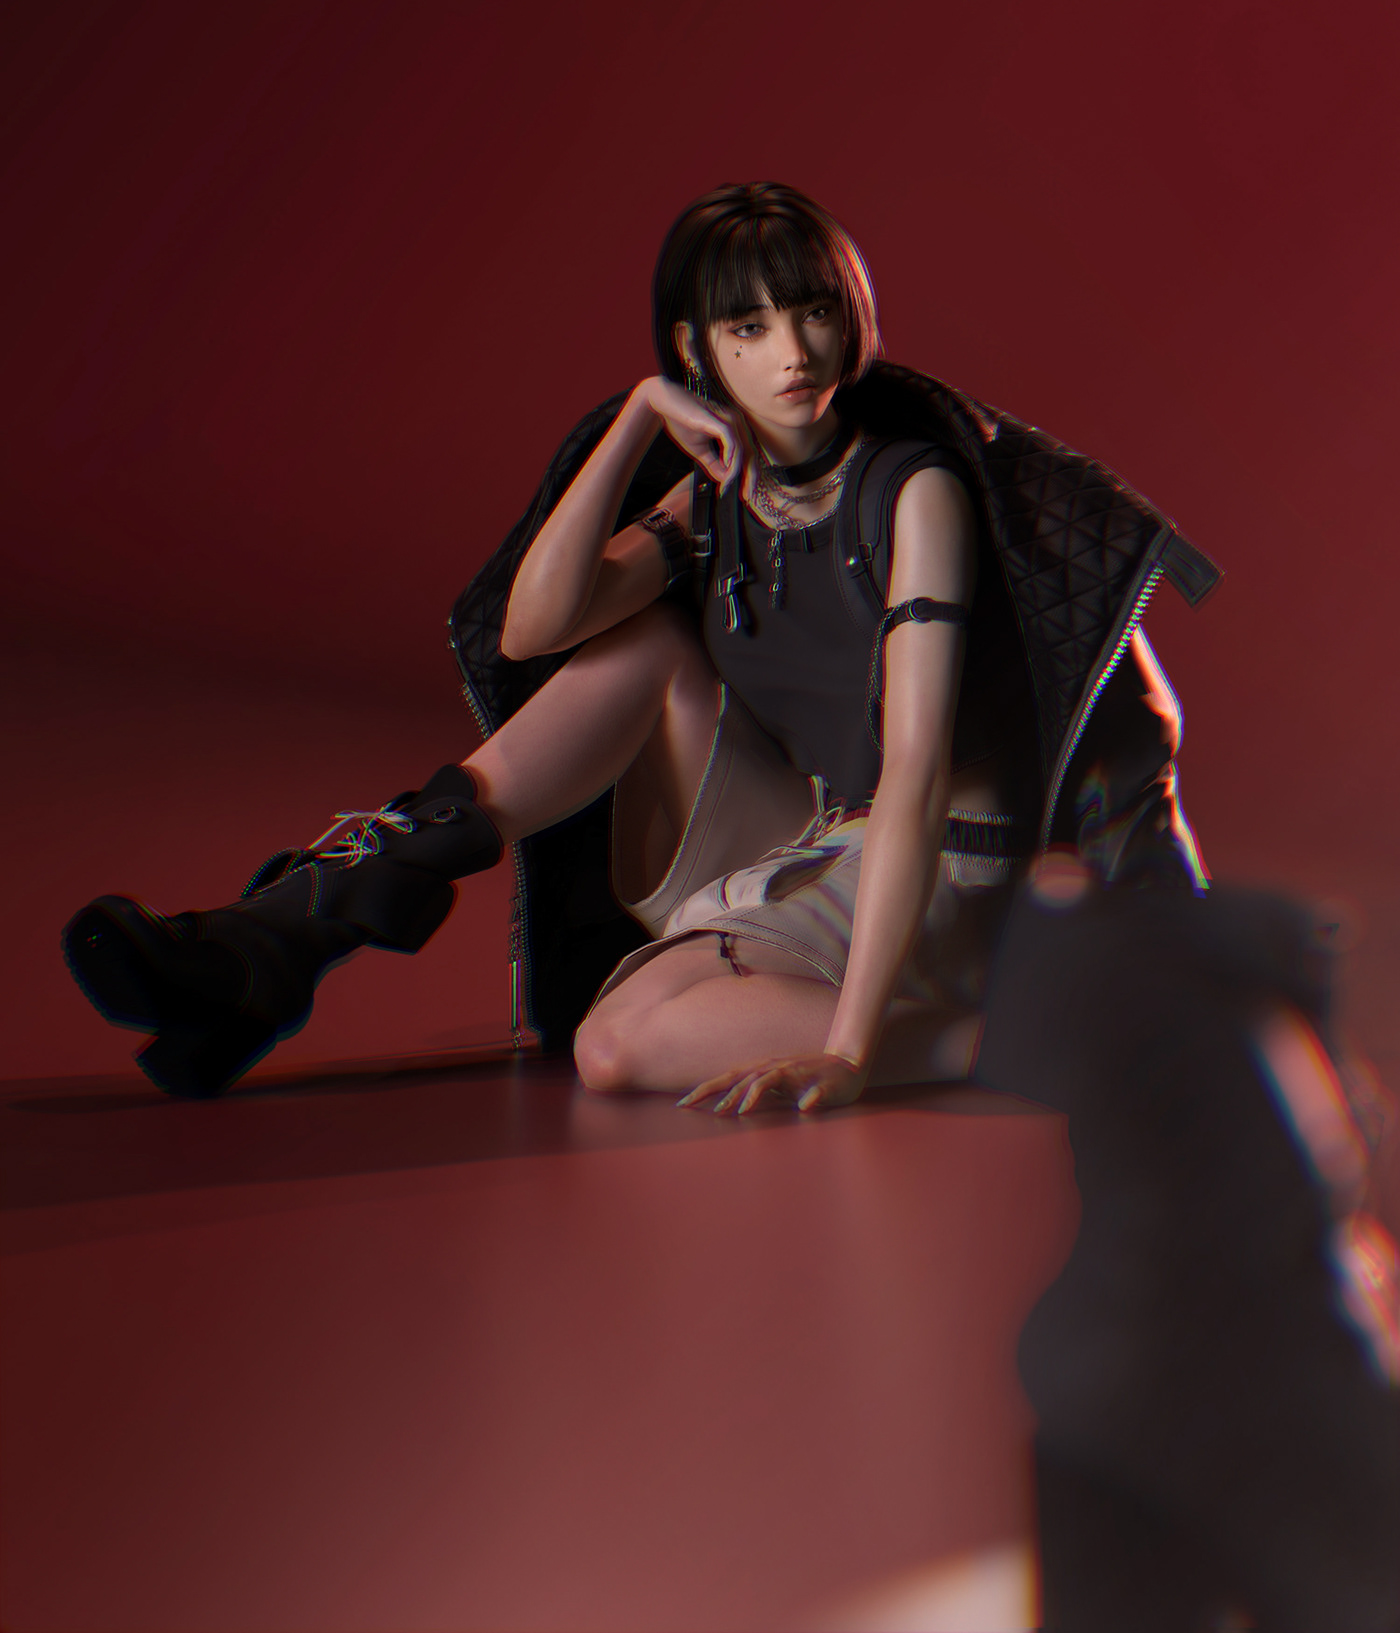 3D model Character 3D Character 3d modeling girls asian black hair jacket Fashion 